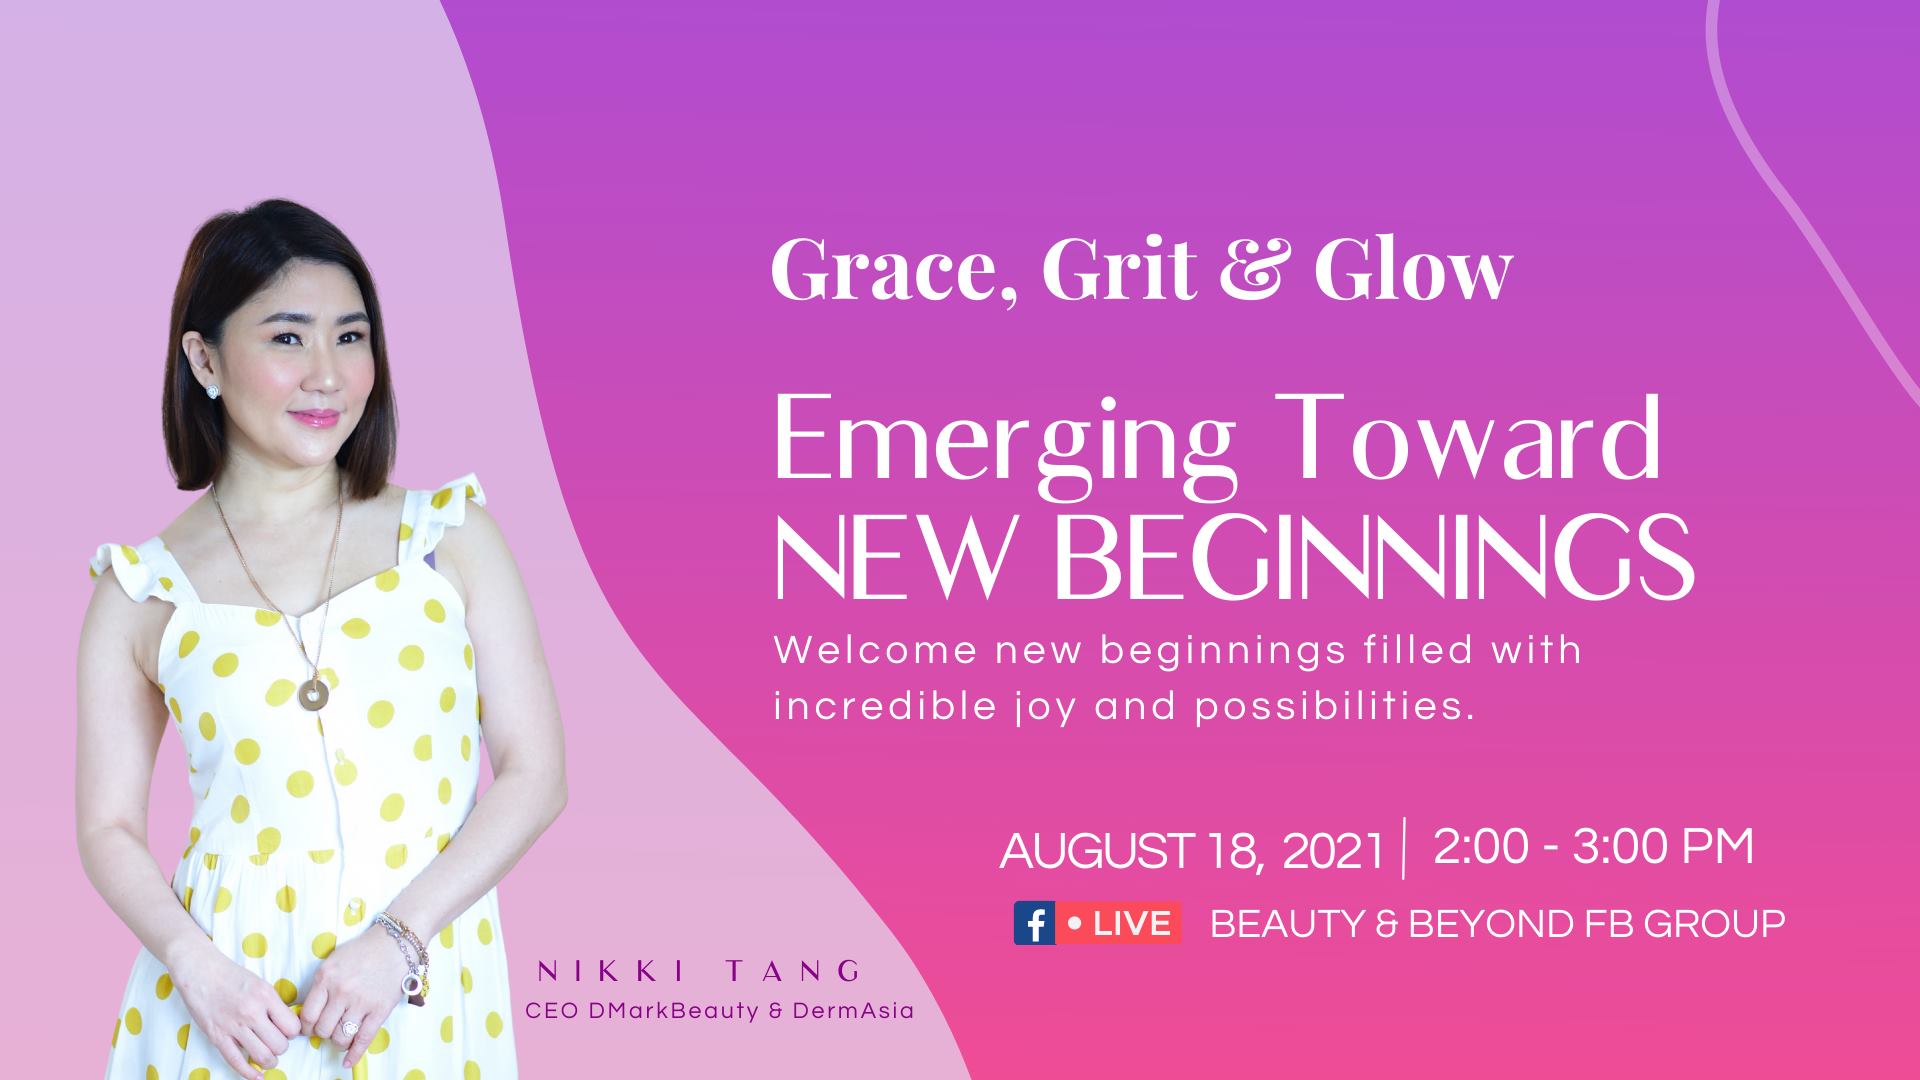 Grace, Grit & Glow Emerging Towards New Beginnings